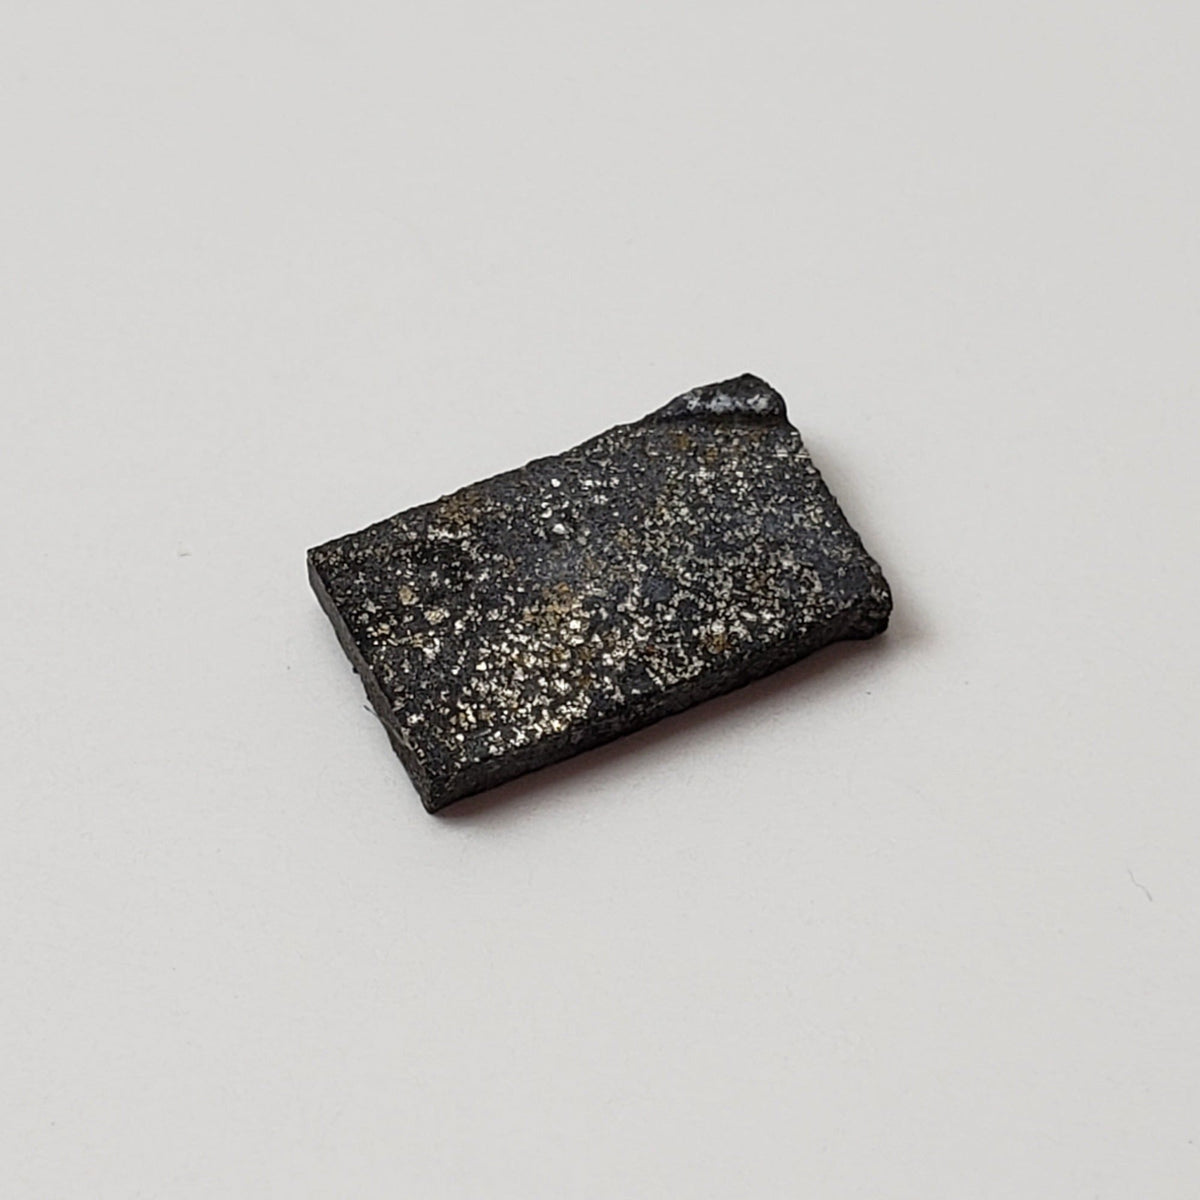 Abee Meteorite | 0.31gr | Part Slice | Rare Enstatite | EH4 Class | Observed Fall 1952 Canada | Canagem.com